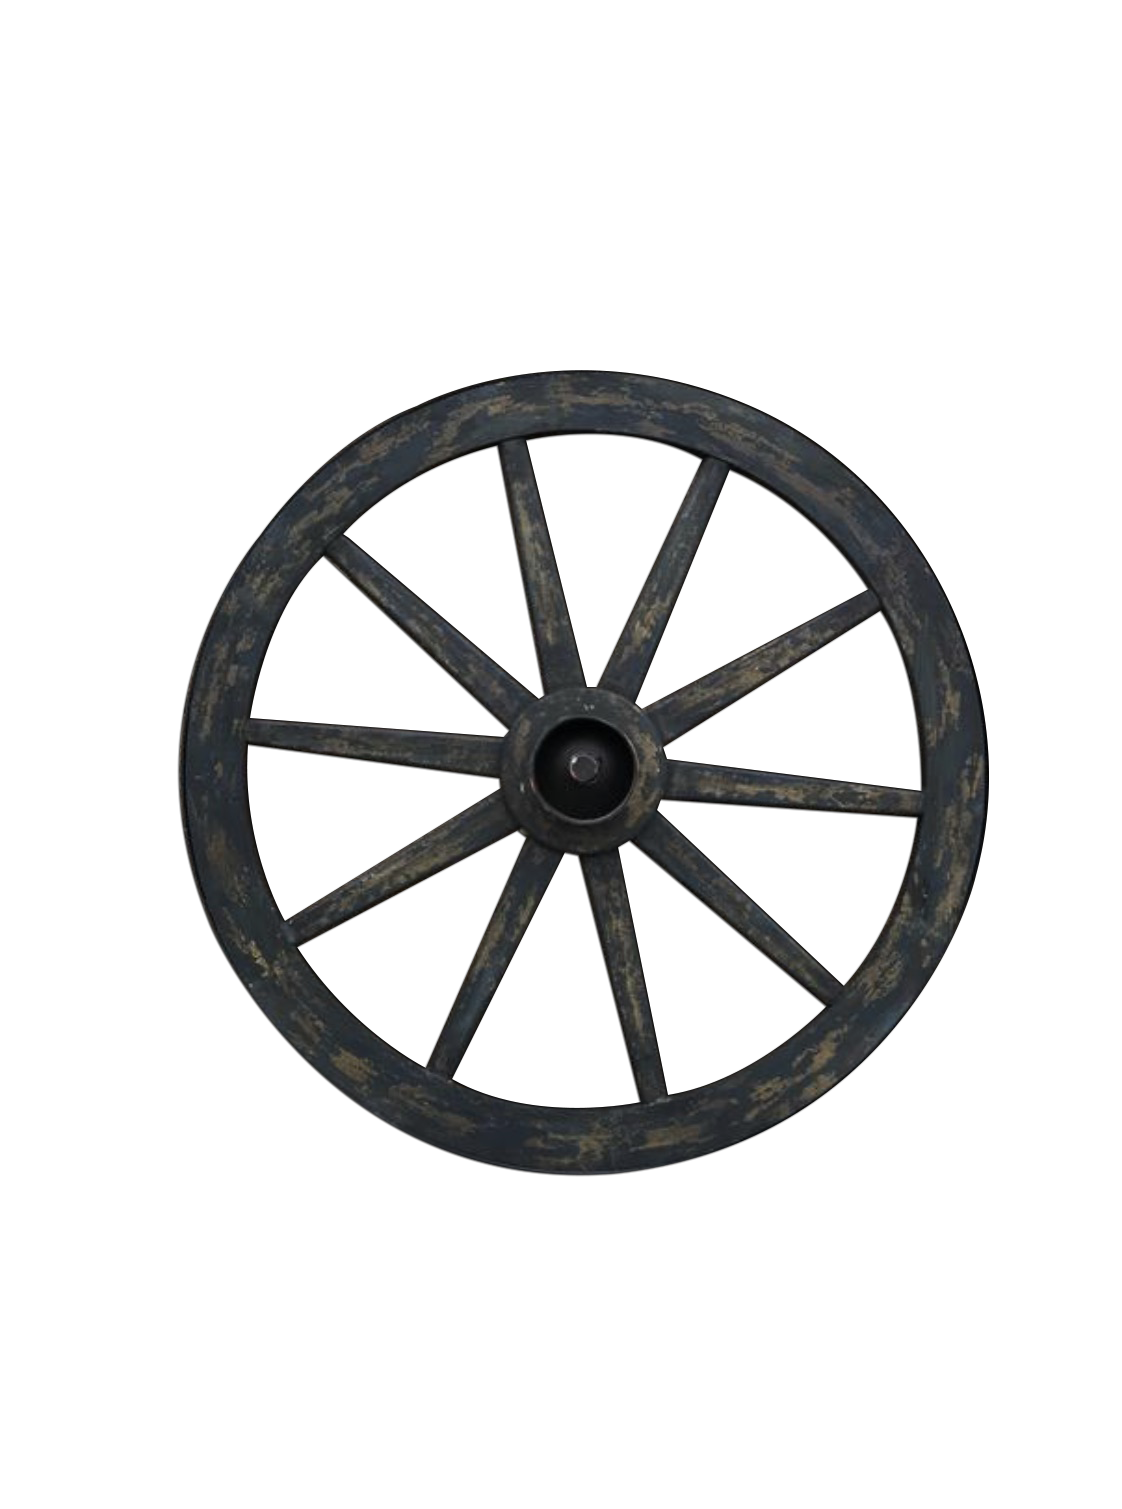 Brown Wagon Wheel